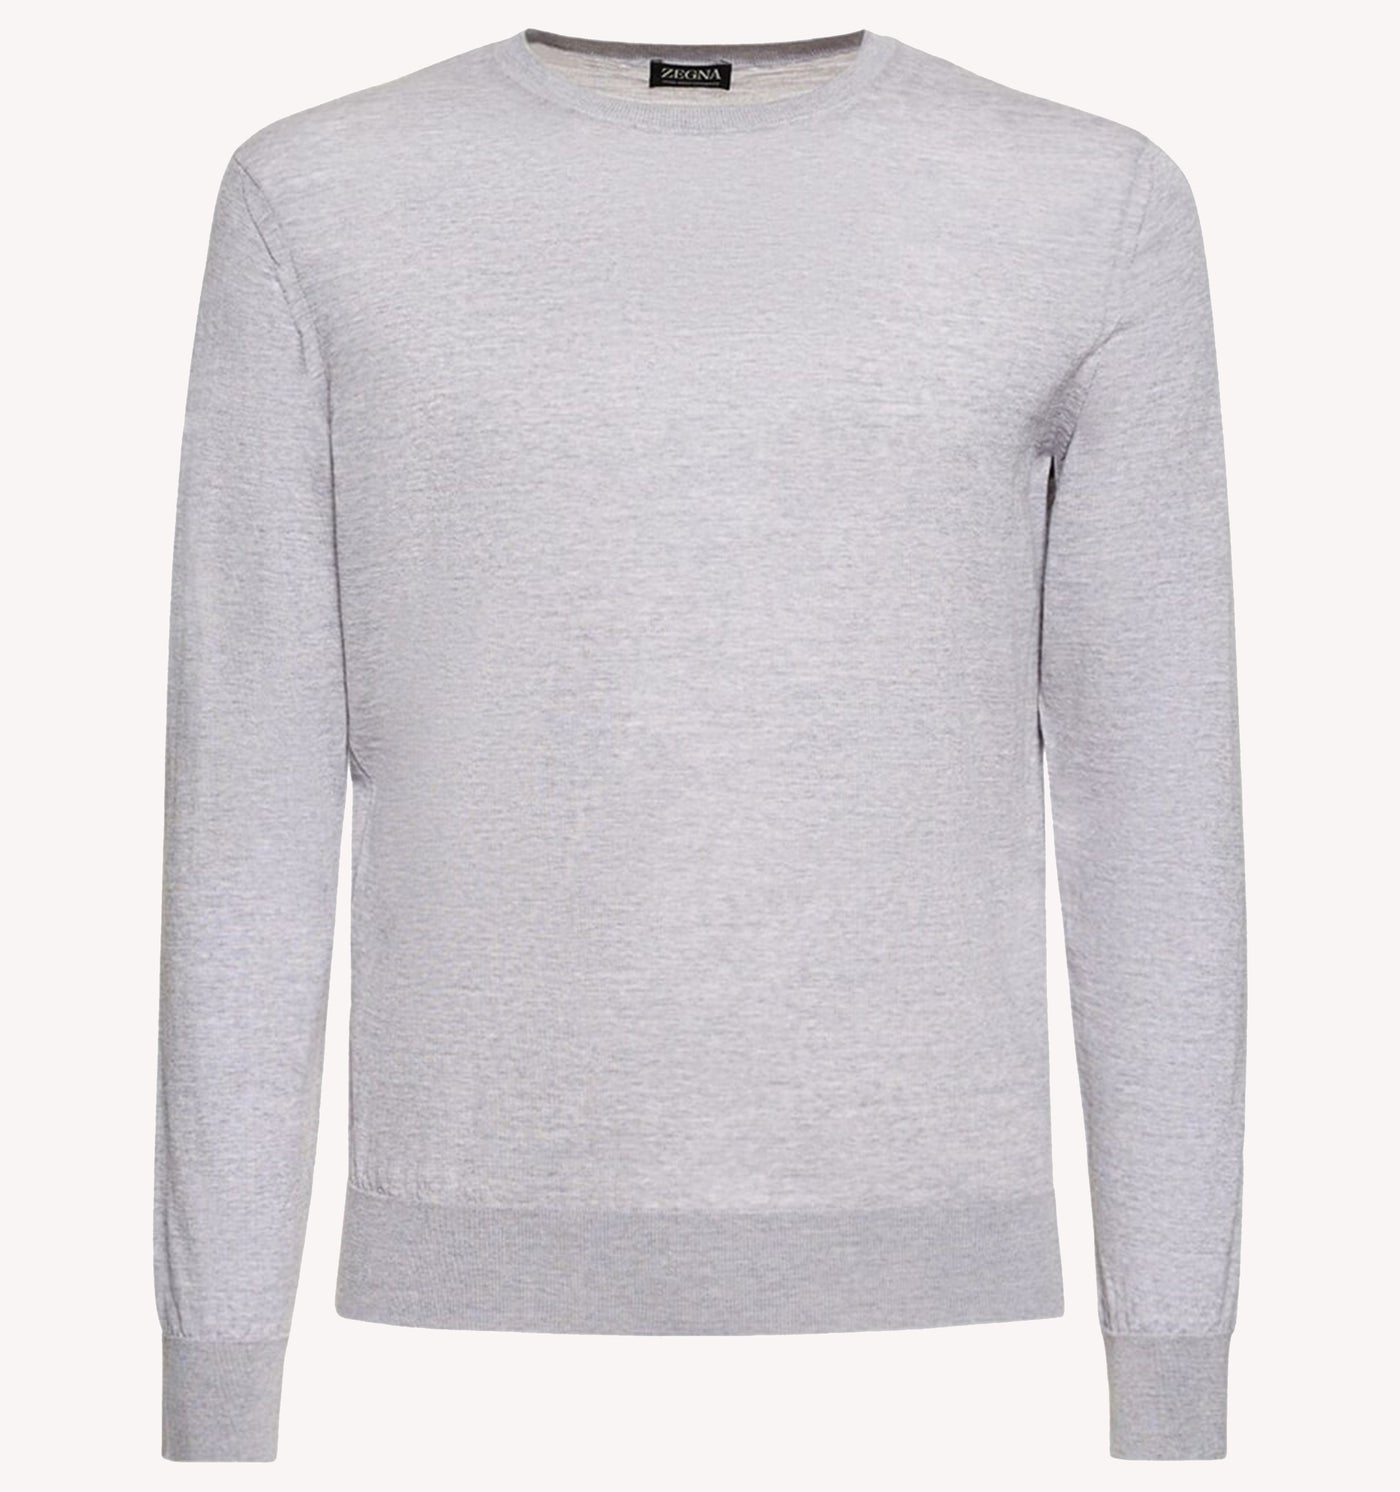 Zegna Sweater in Light Grey Melange